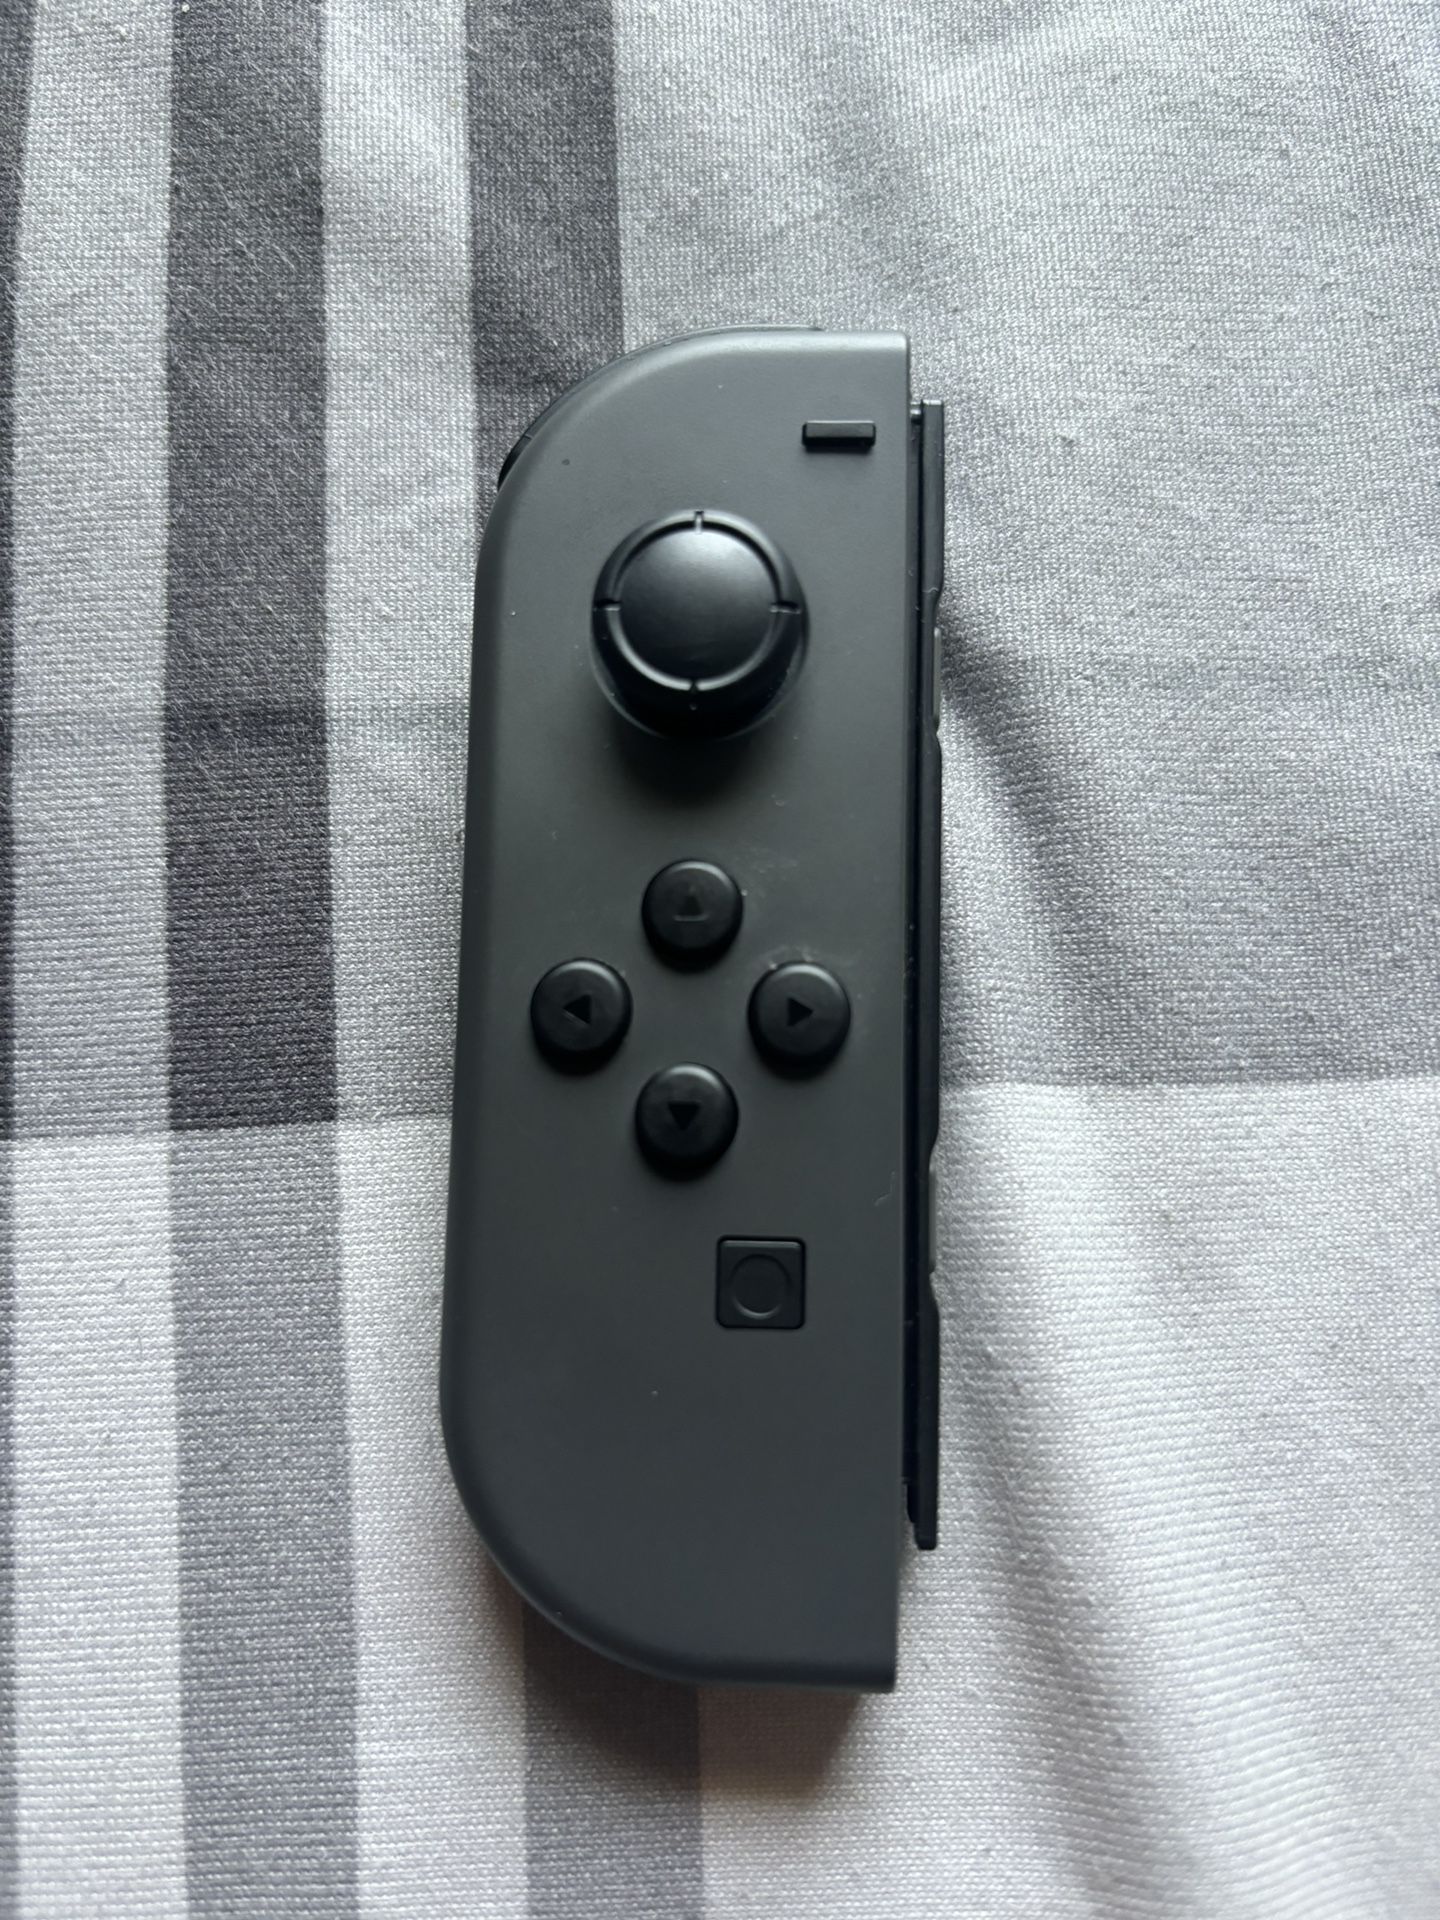 Nintendo Switch Gray left Joycon 